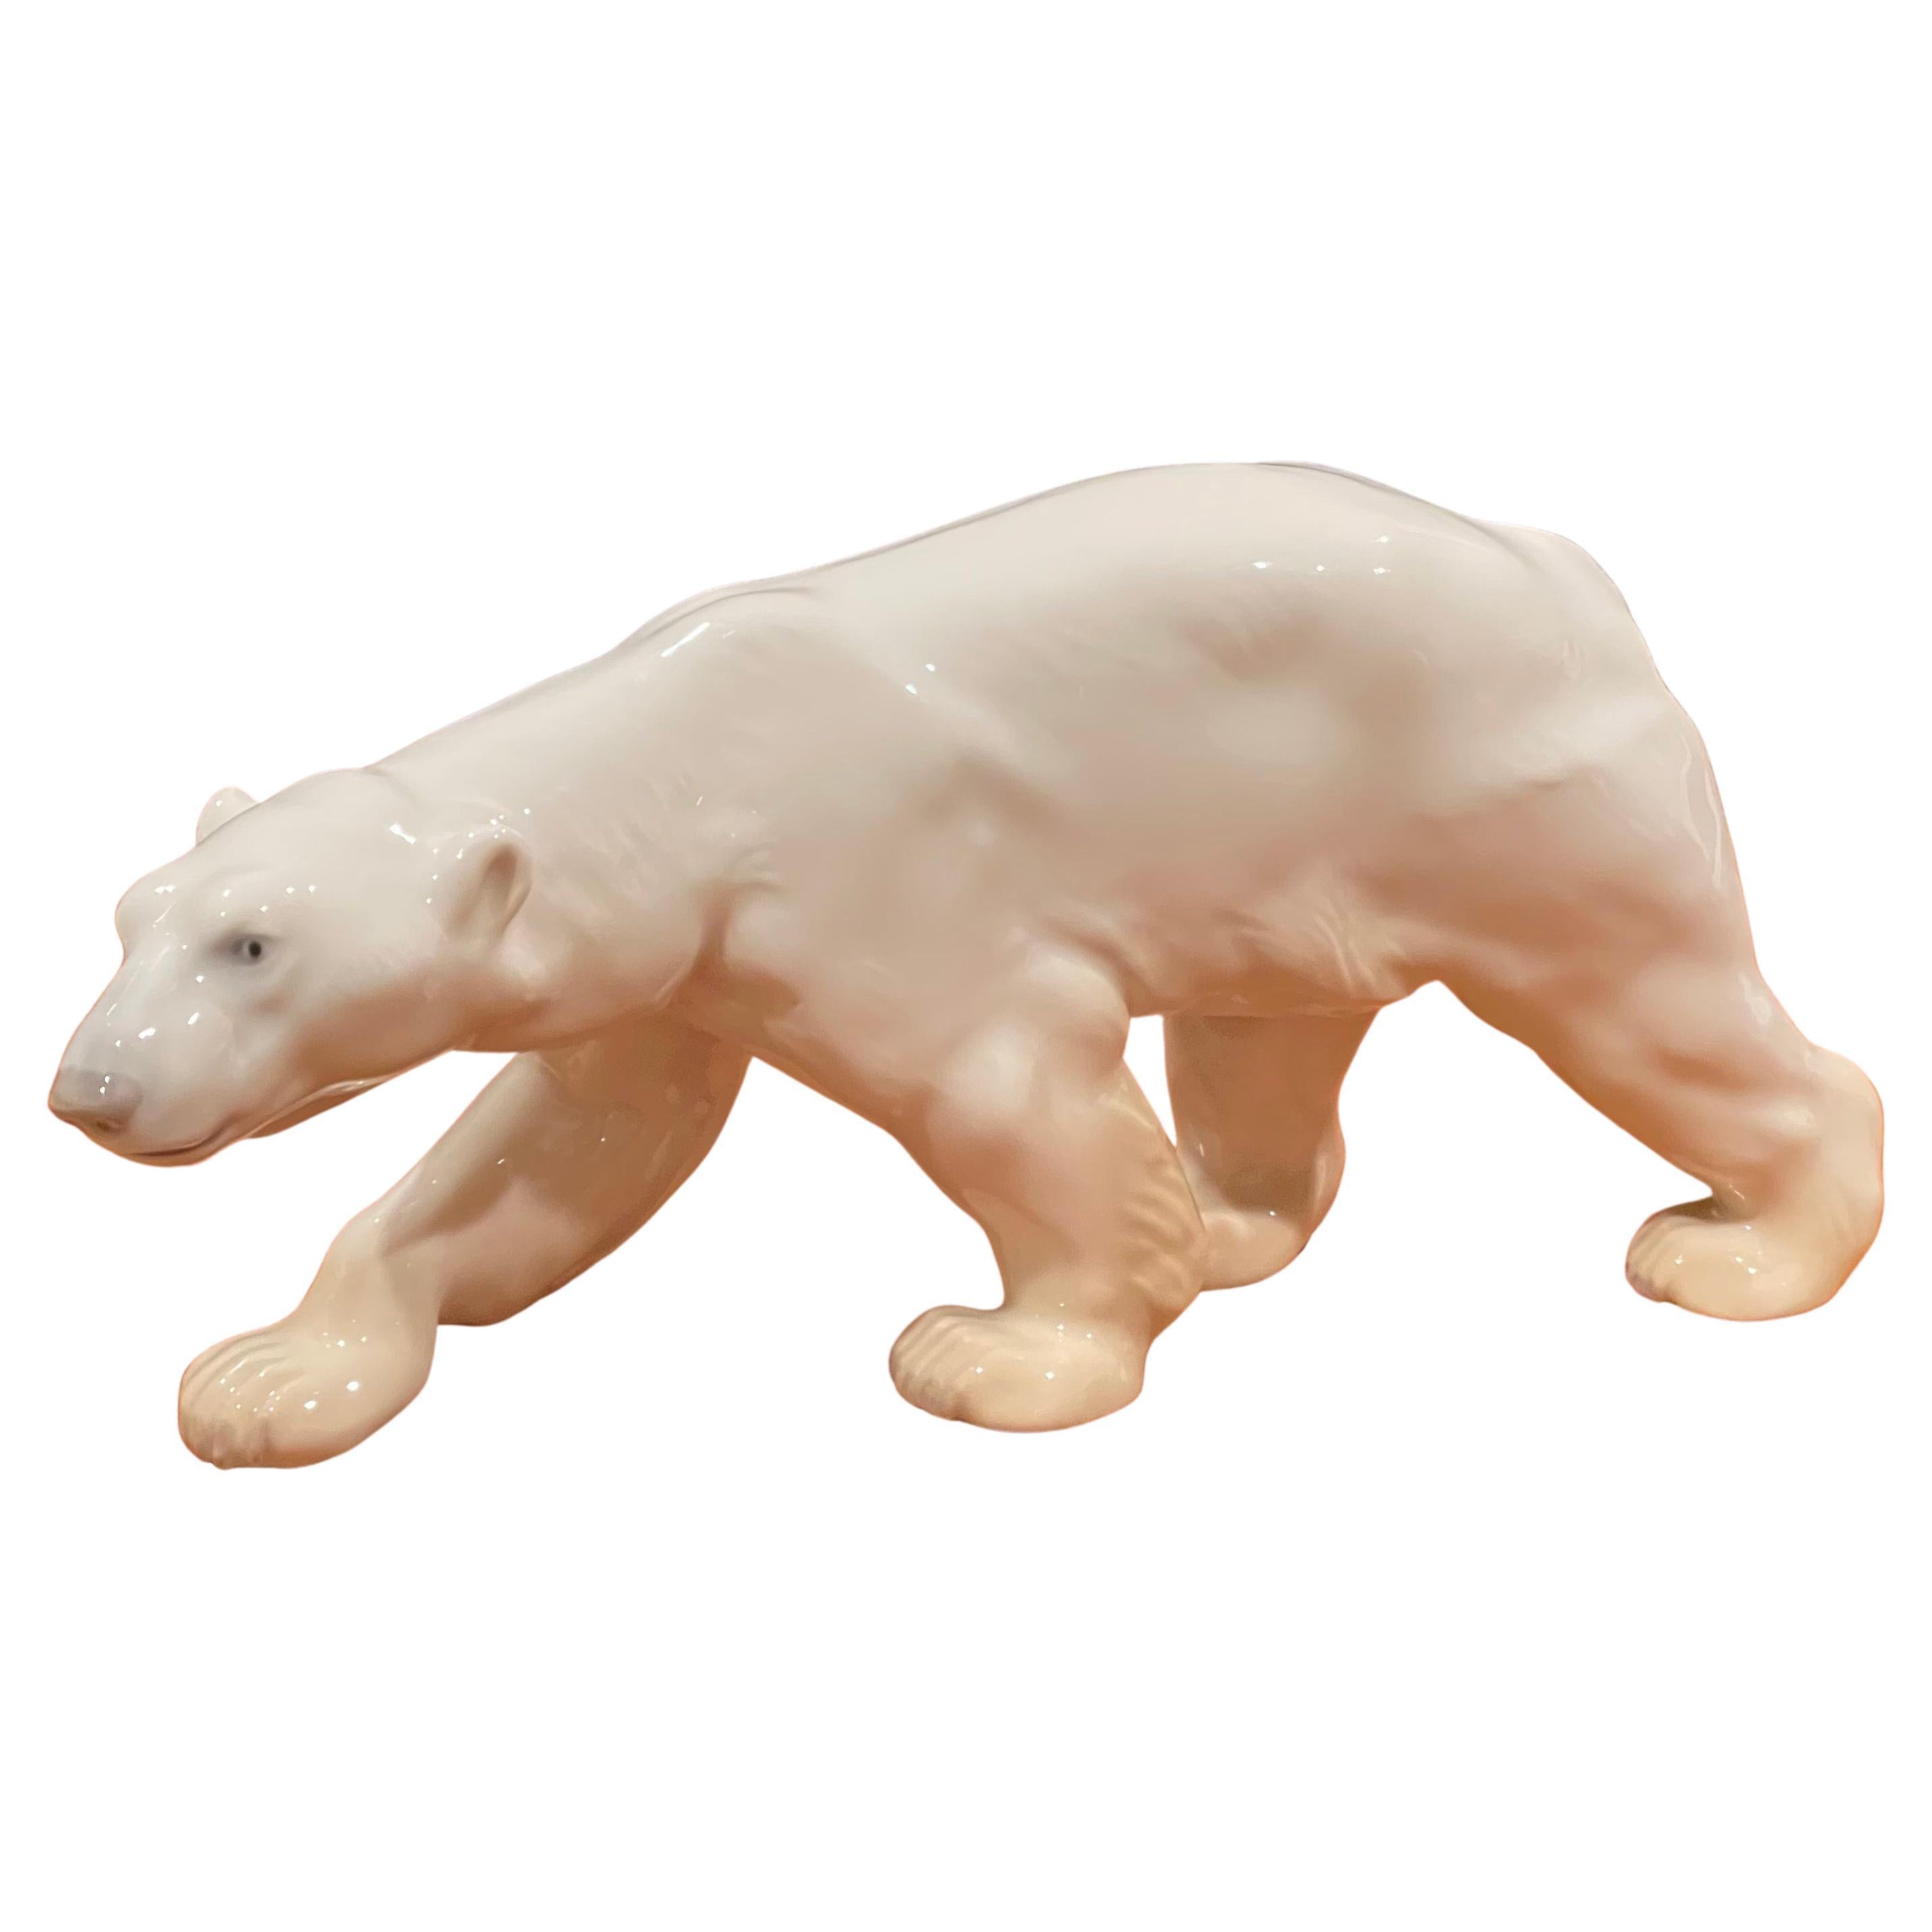 Details about   Polar Bear White Marble Figurine Wild Animal Stone Statue Russian Art Sculpture 